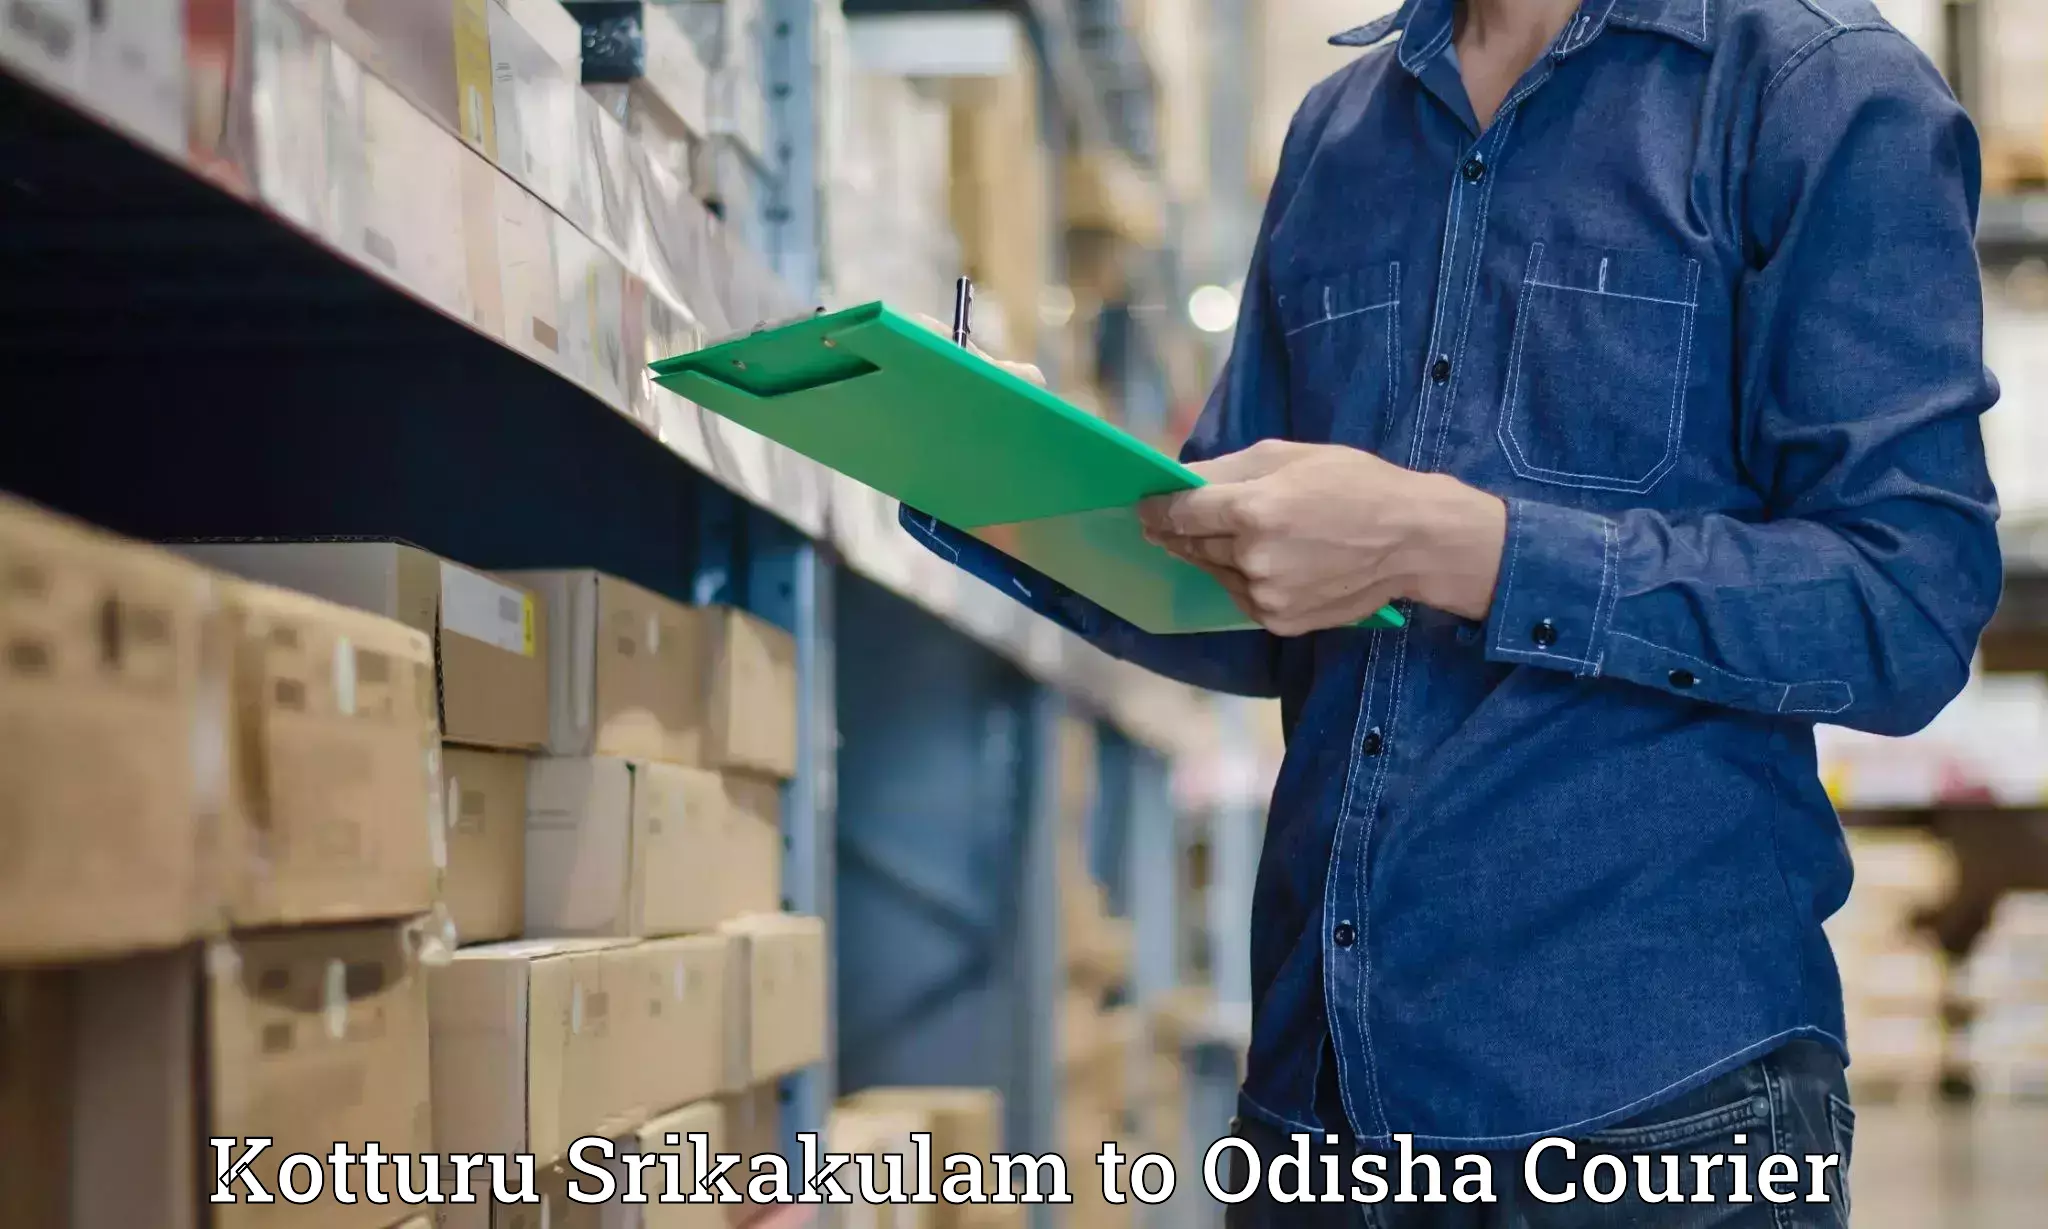 Reliable delivery network Kotturu Srikakulam to Keonjhar